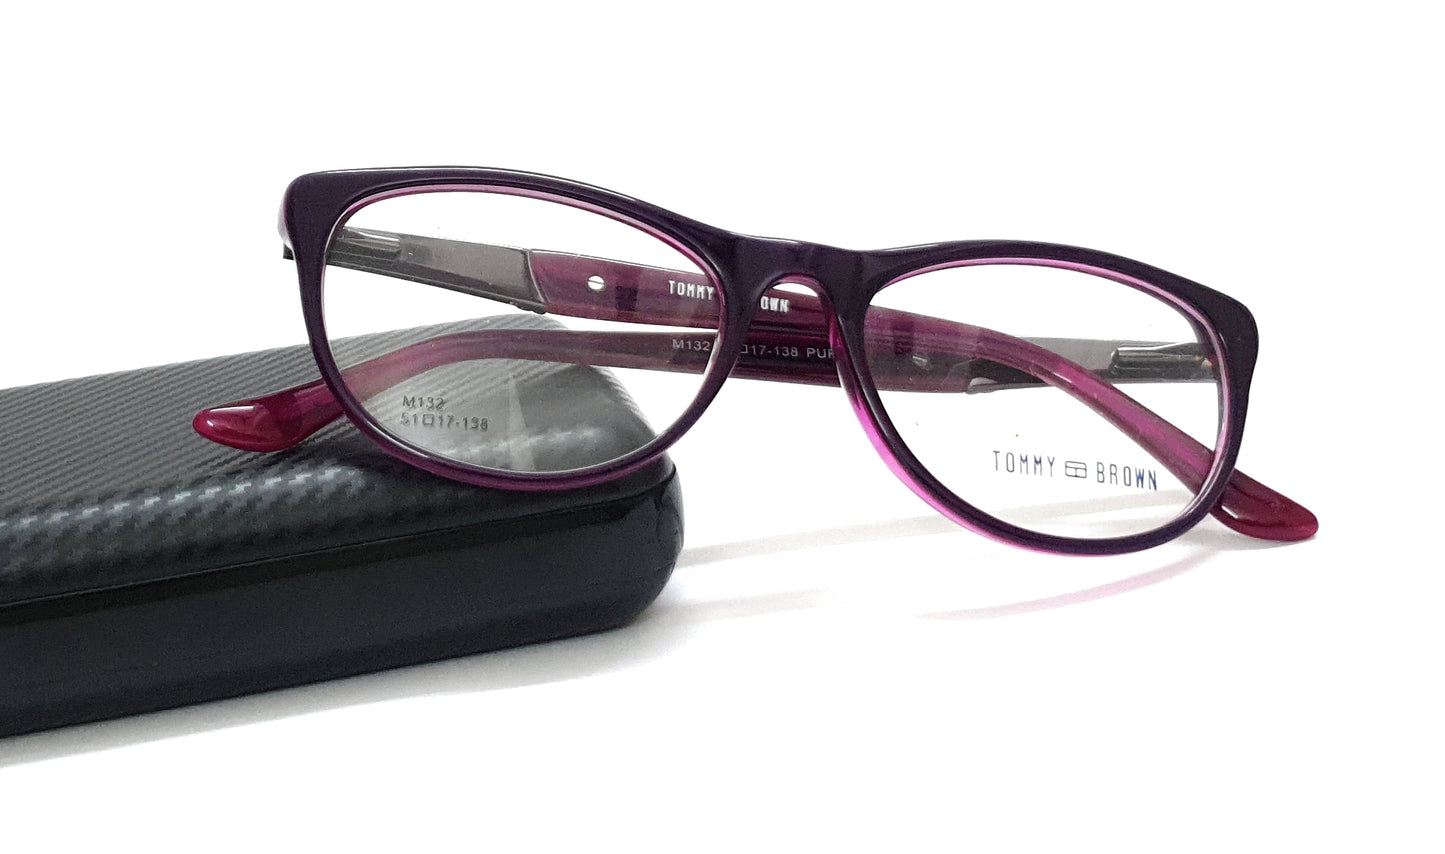 Tommy Brown Cateye Eyeglasses HT132 Purple Spectacle